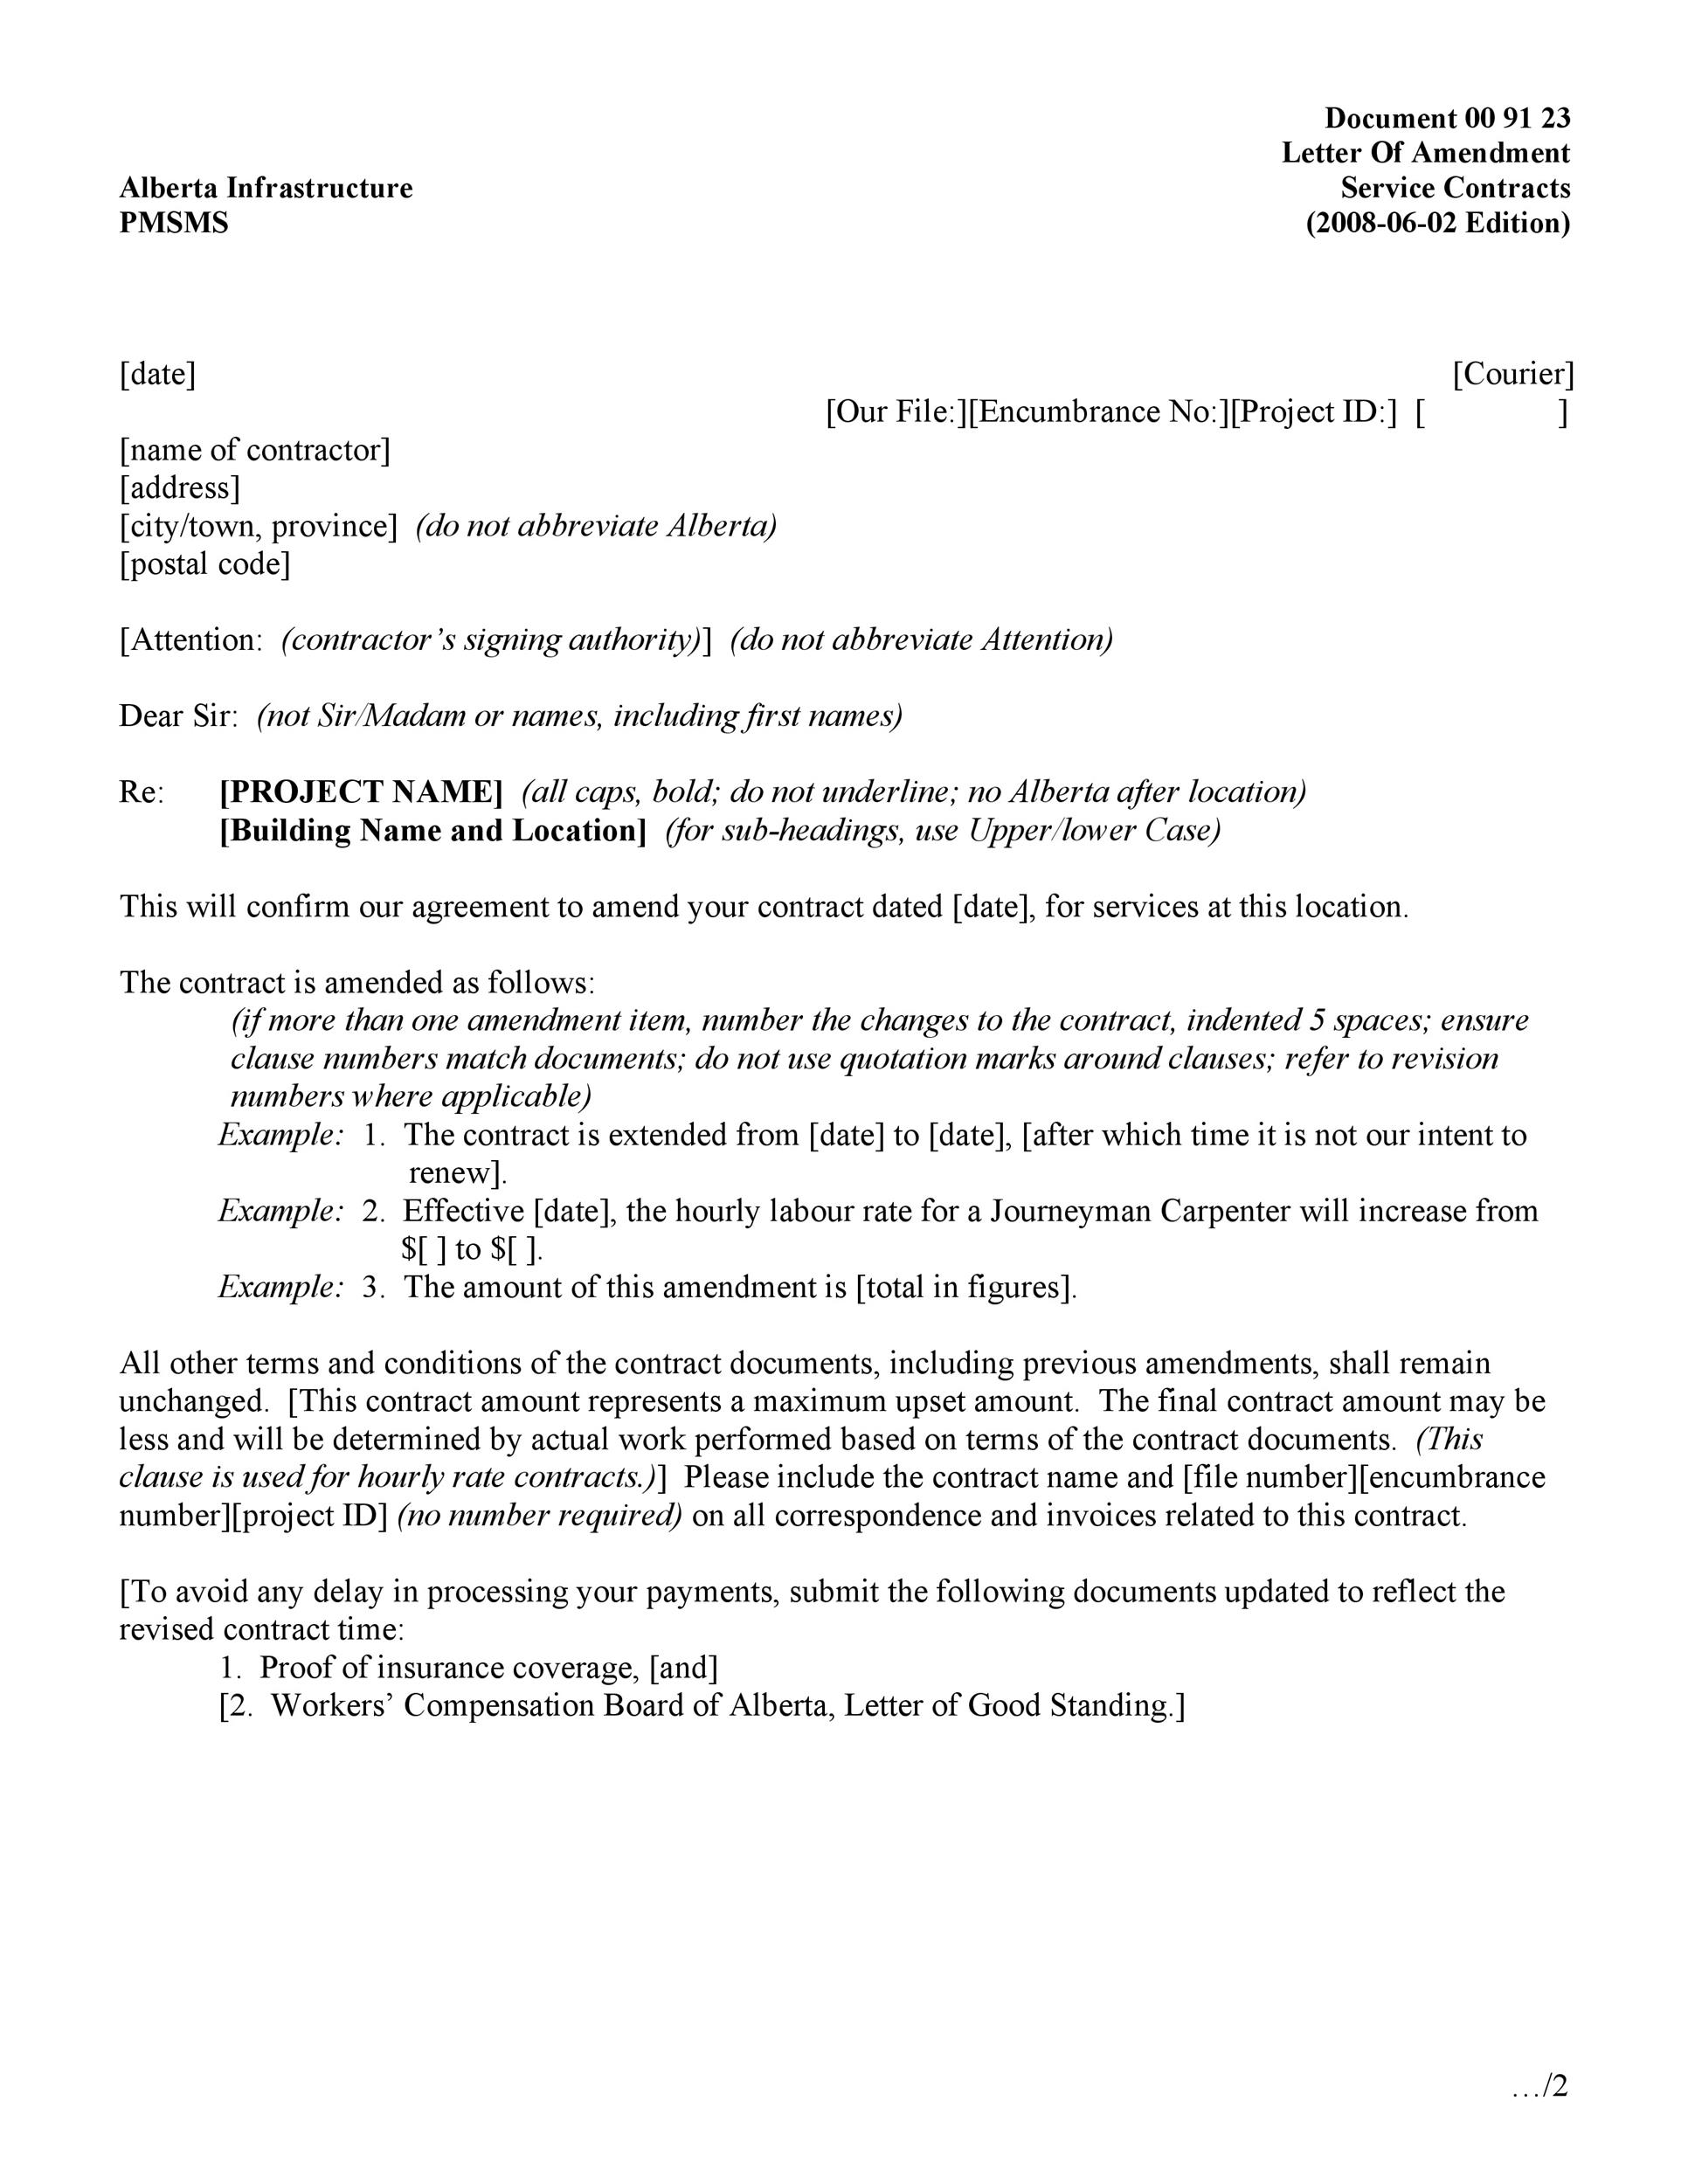 Free contract amendment 01